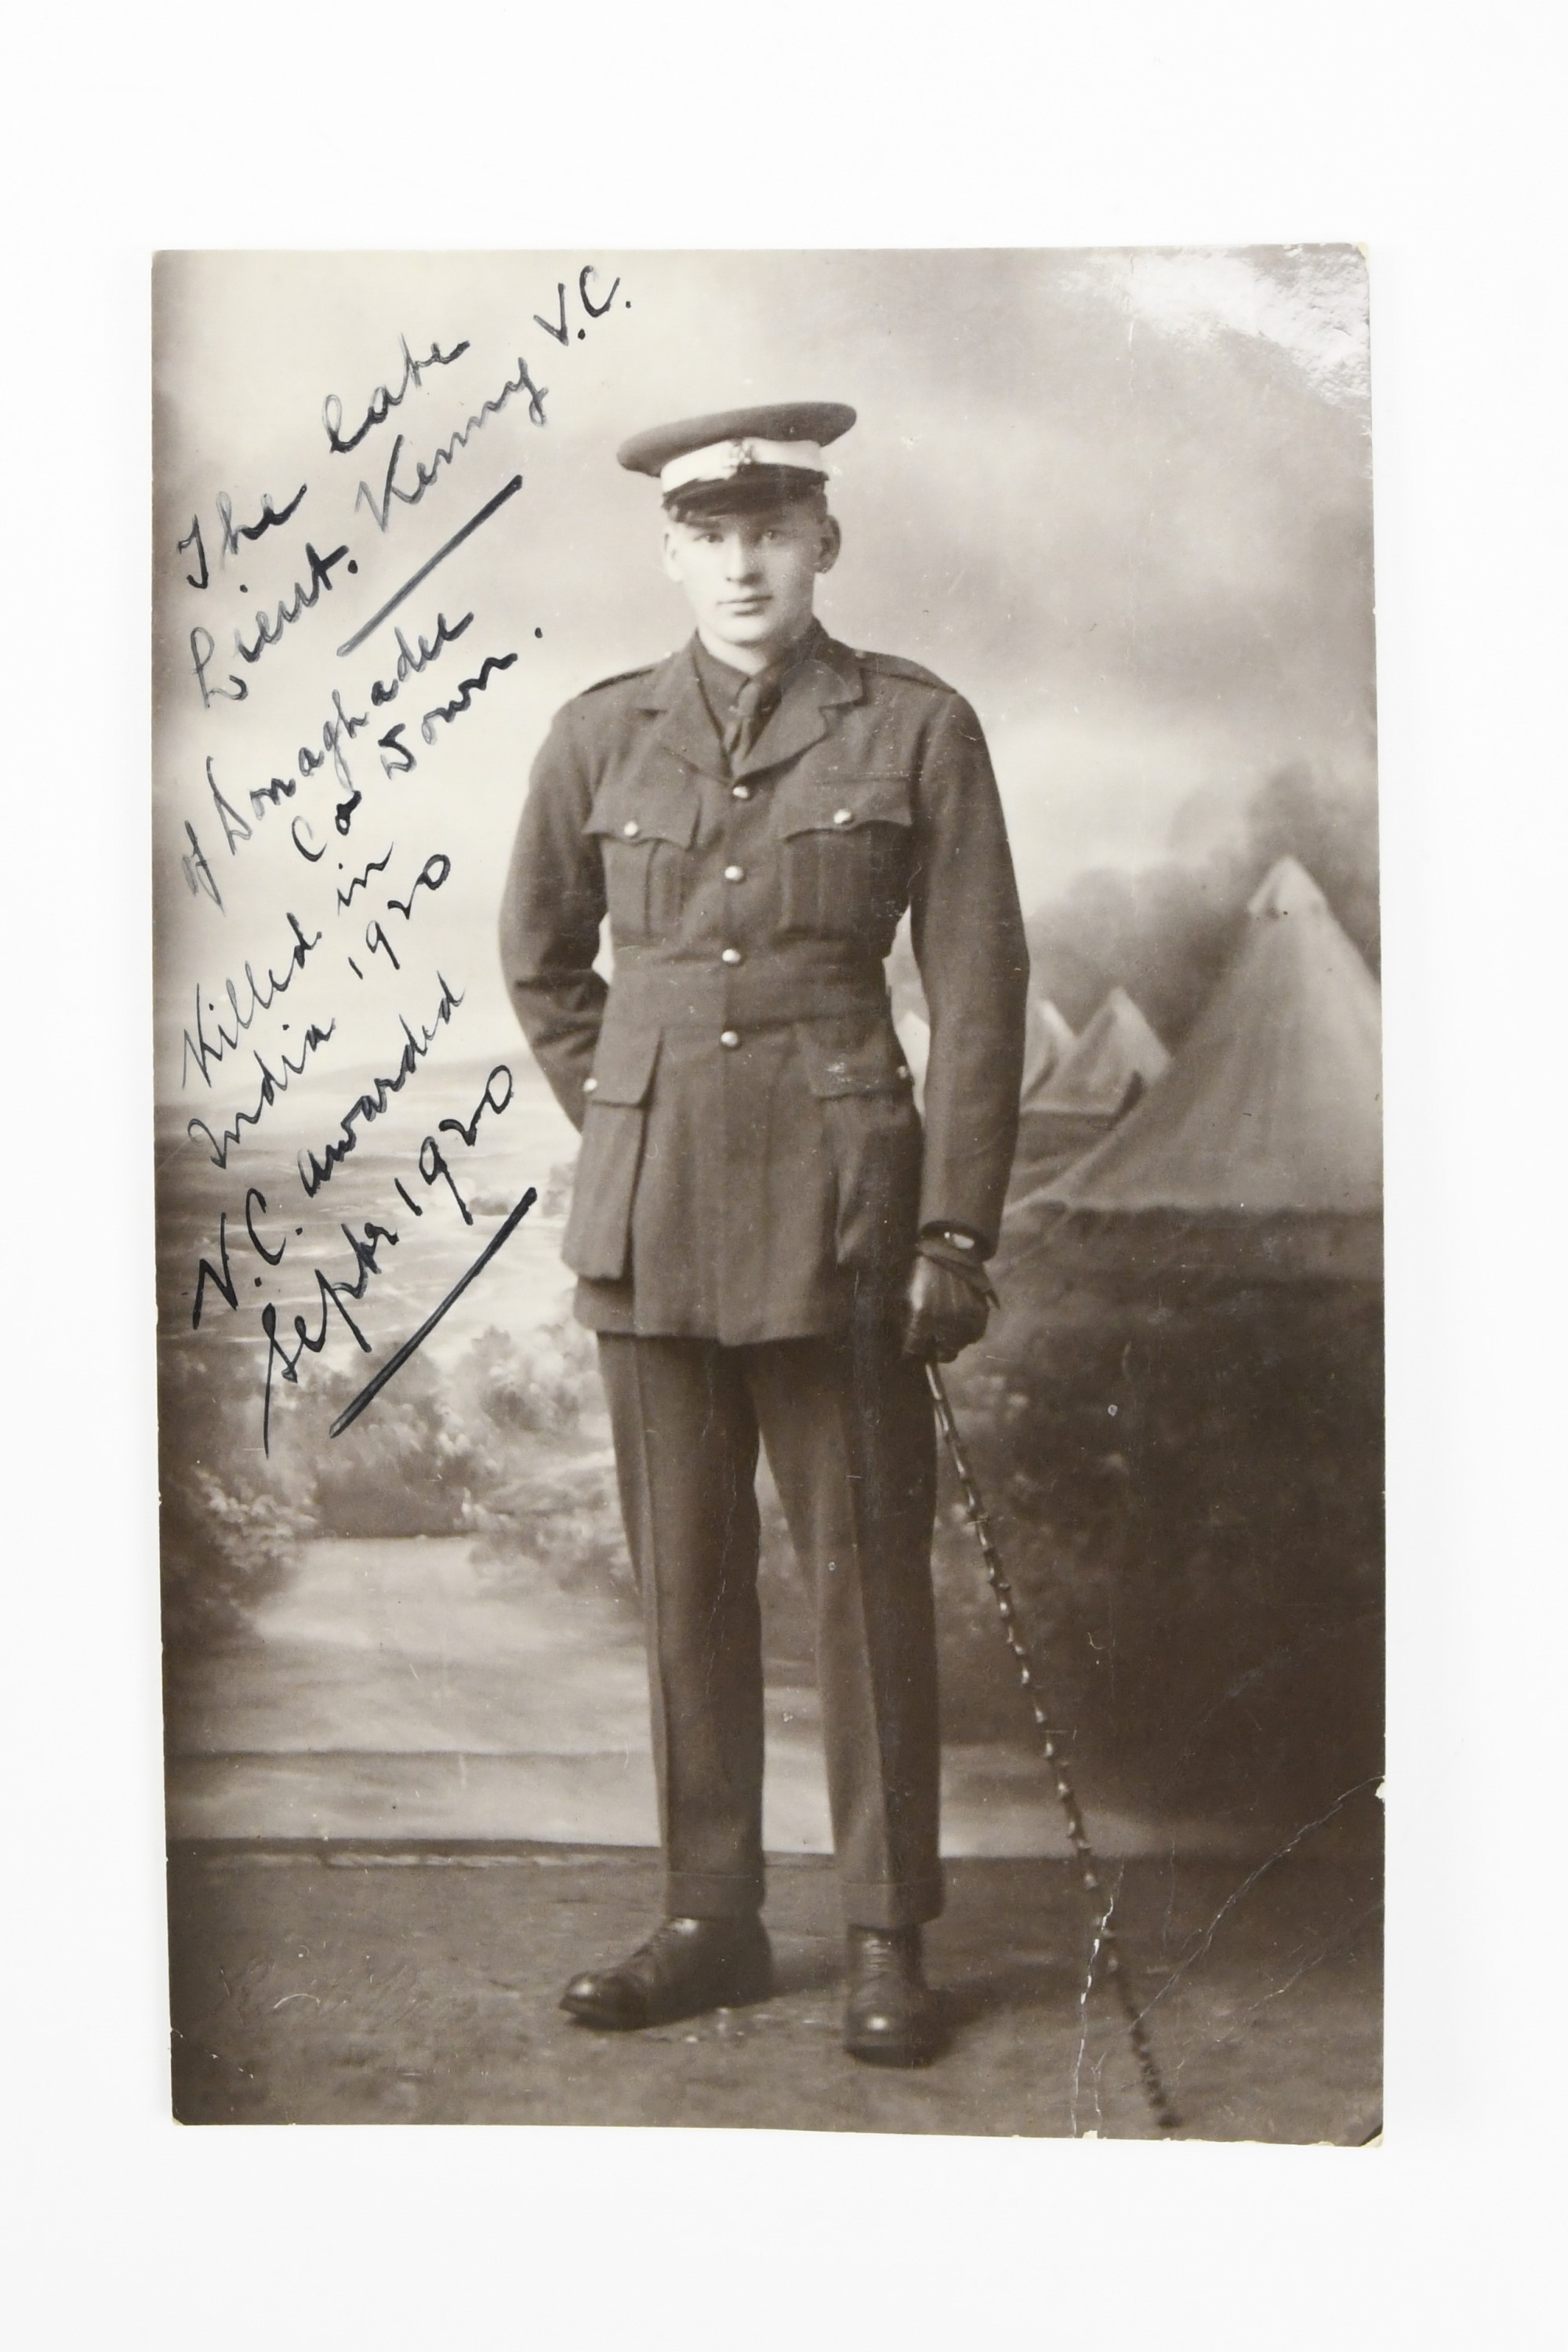 [ Victoria Cross ] A portrait postcard portraying Lieutenant William David Kenny. [Awarded the